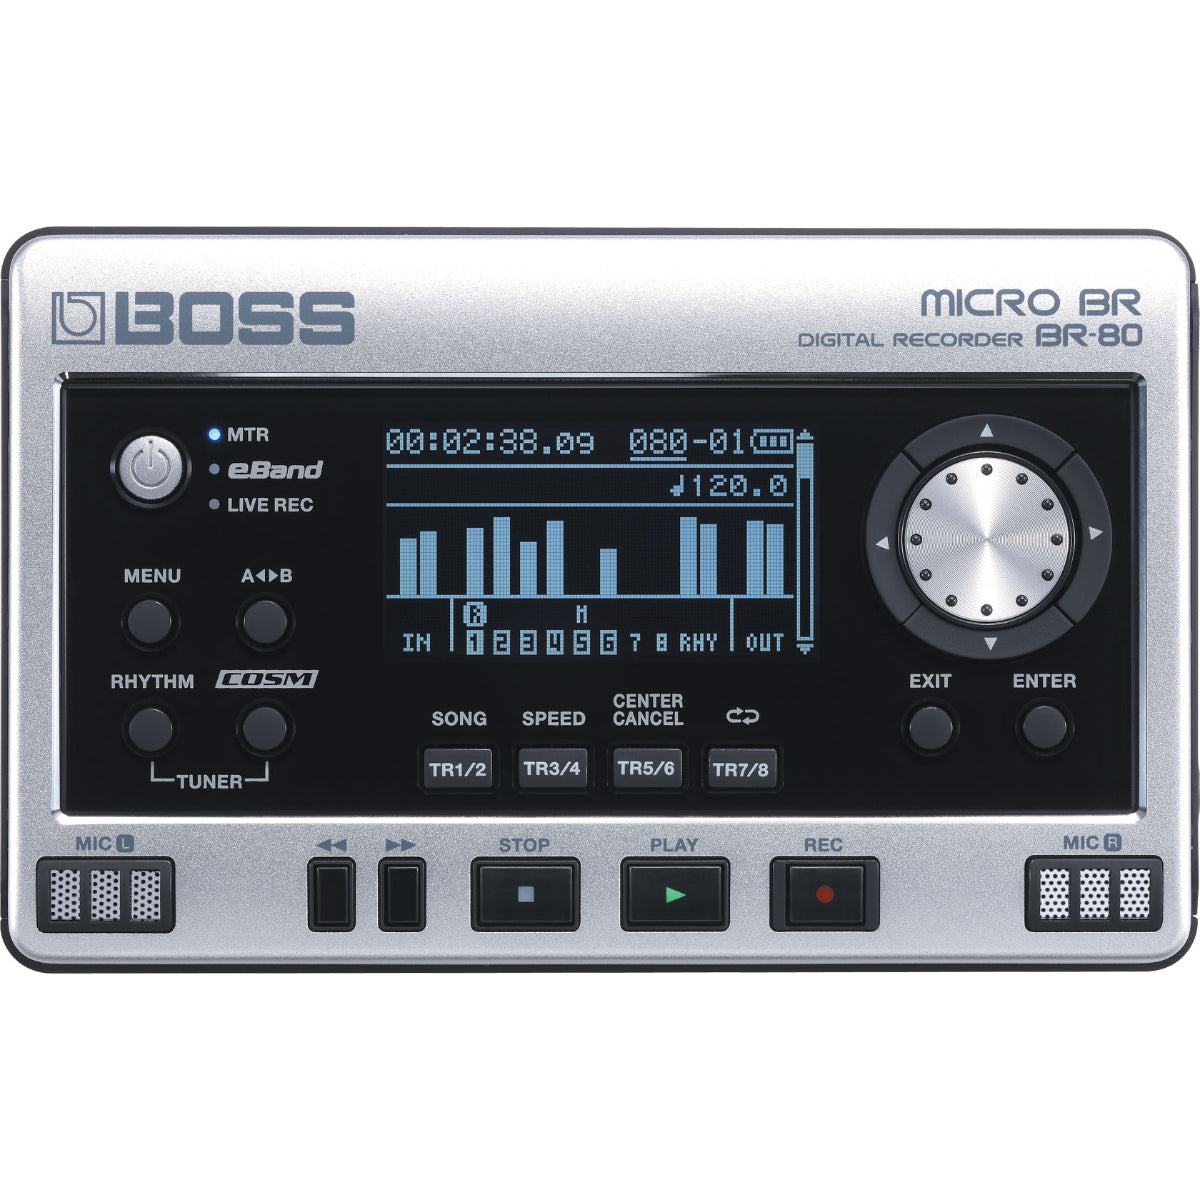 Micro BR - BR-80 Digital Recorder